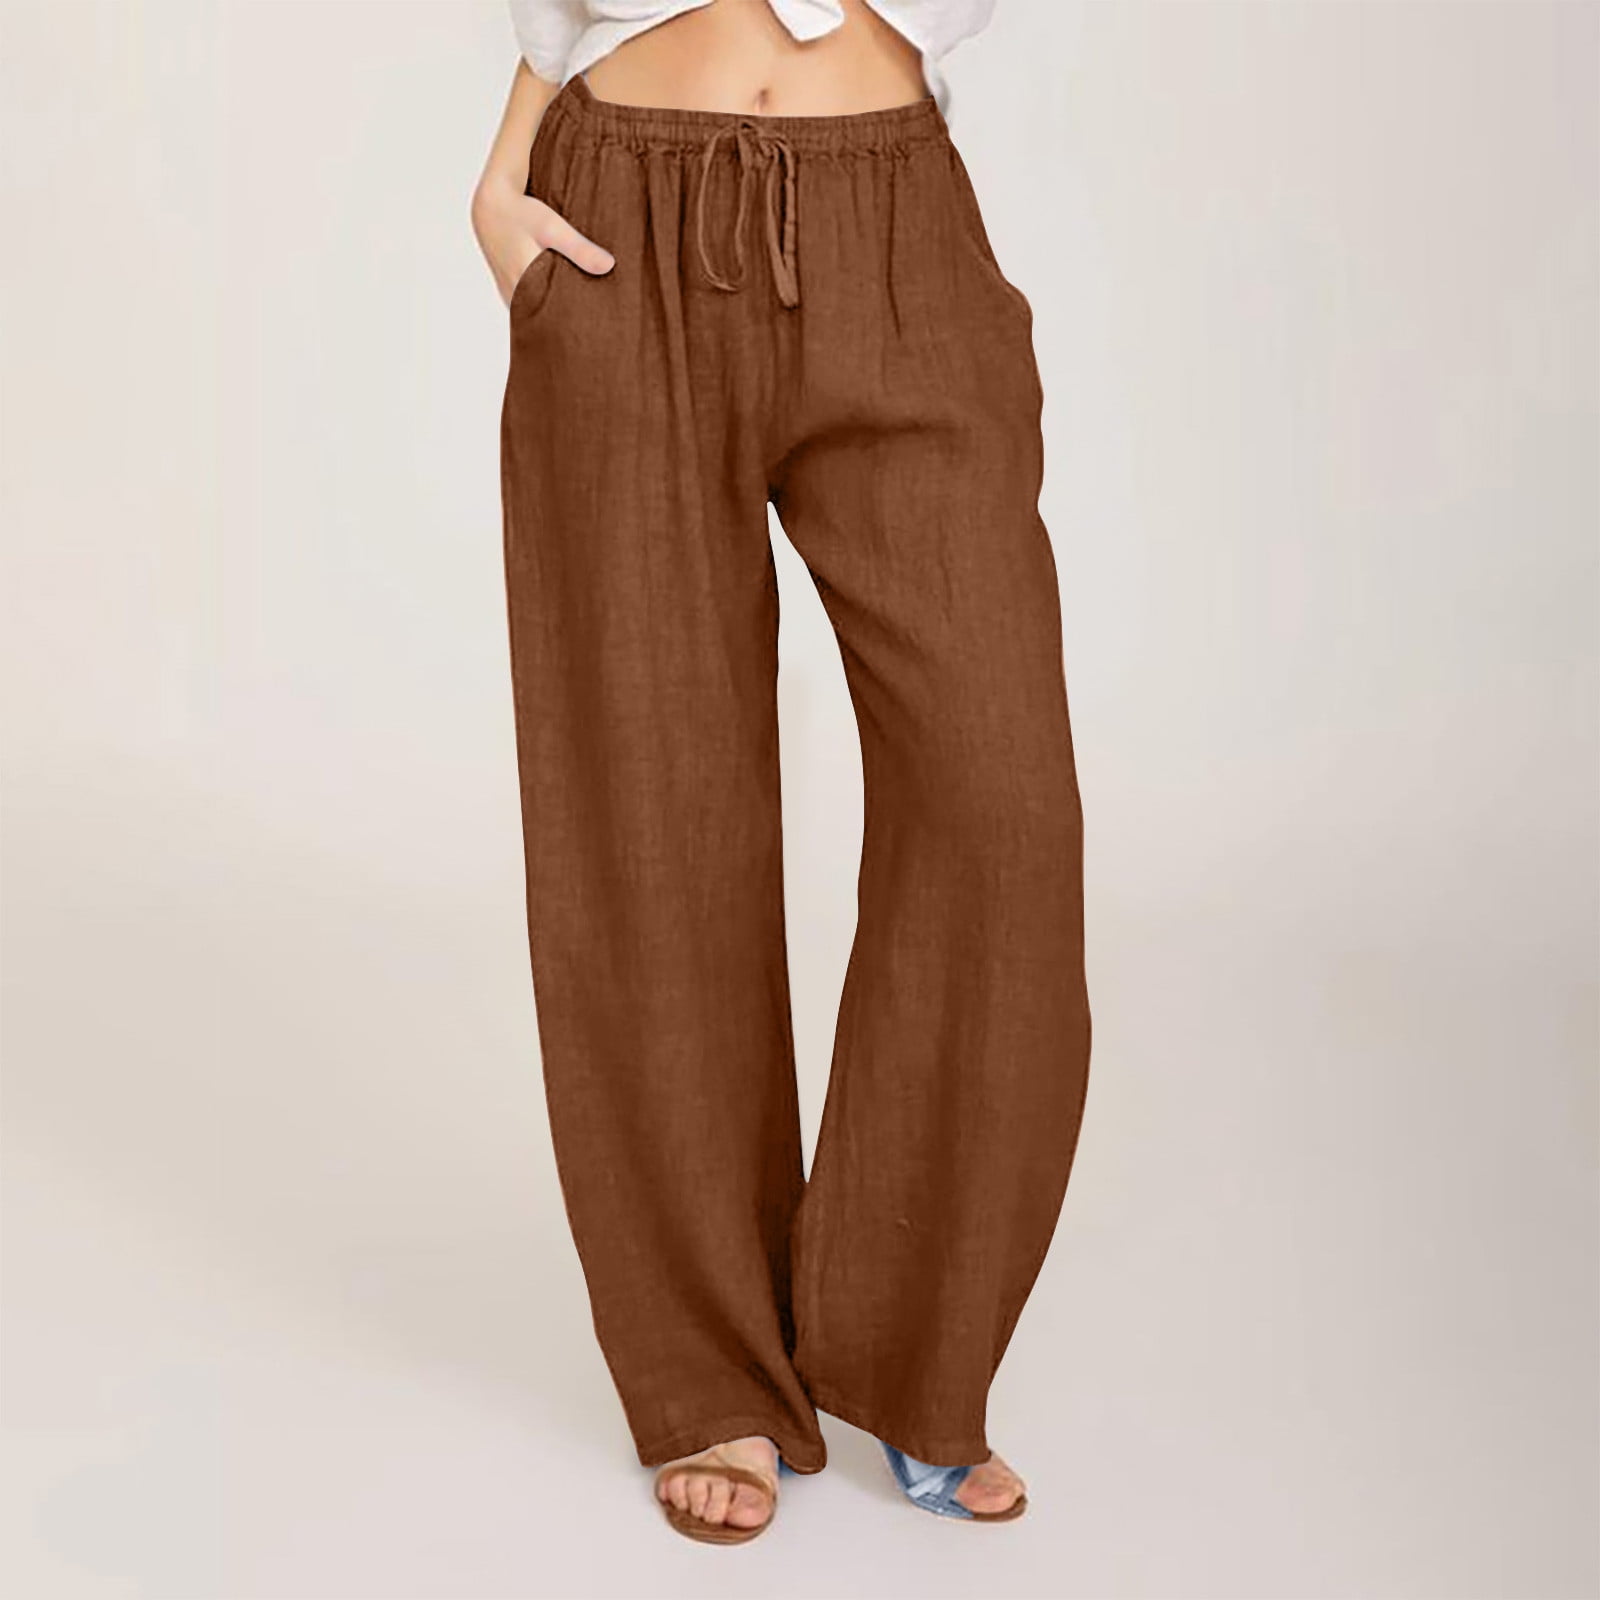 Soft Surroundings 2AX22 Women's Brown Elastic Waist Bootcut Pants